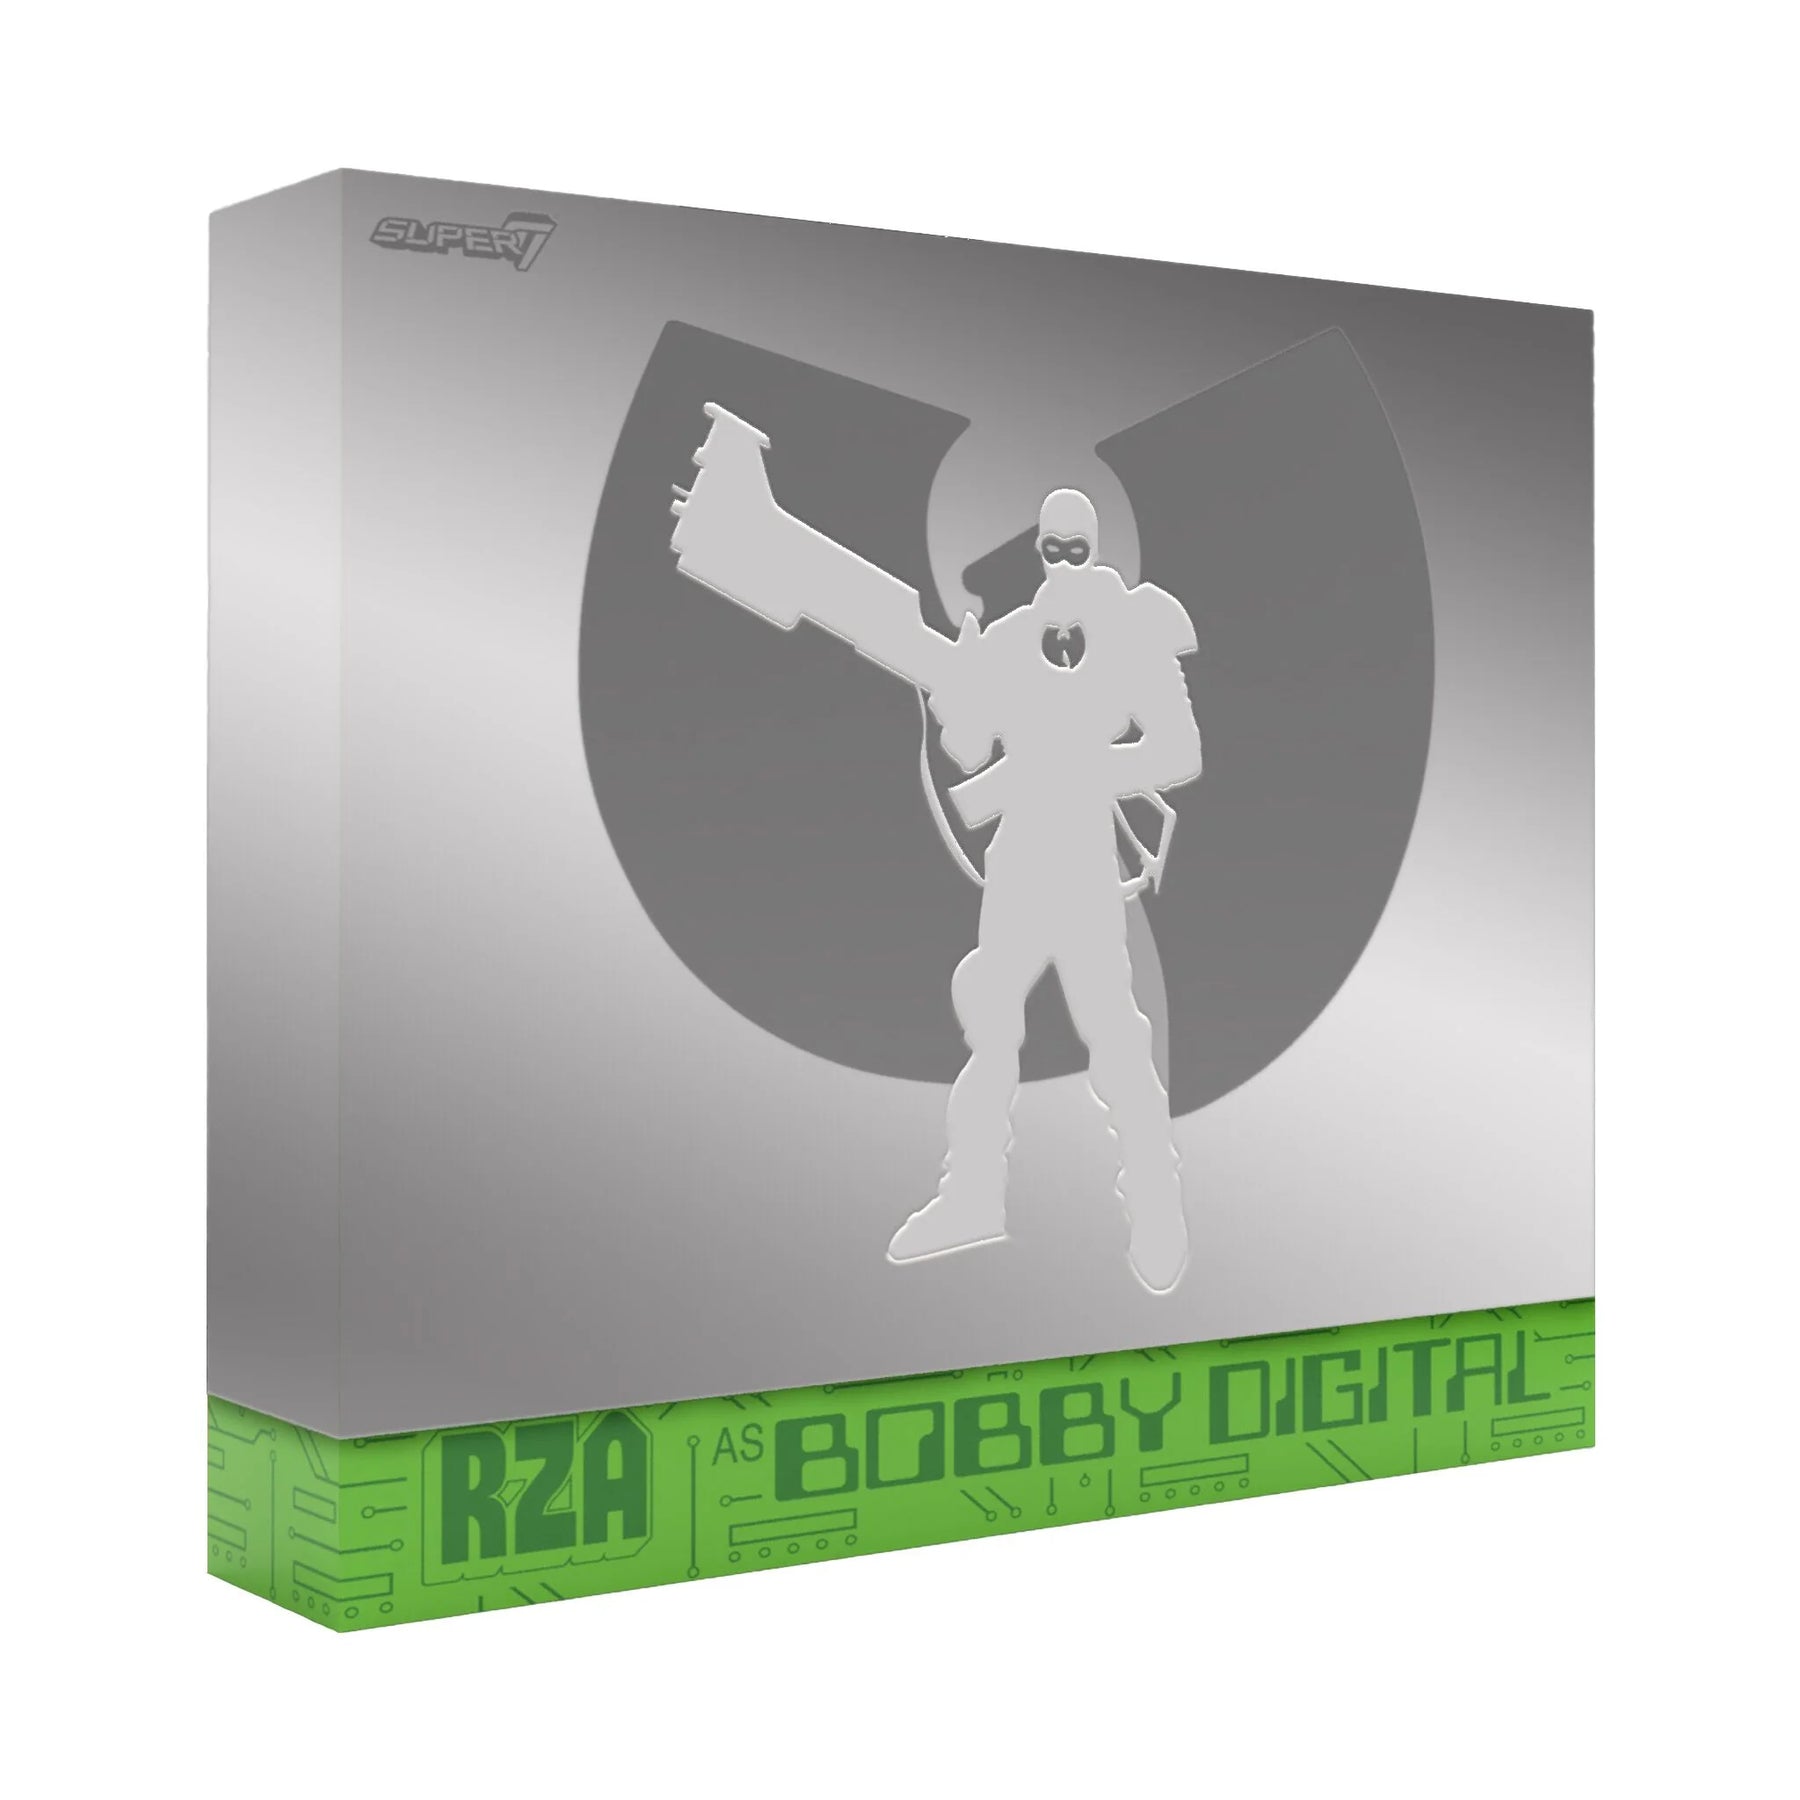 RZA/Bobby Digital Box Set w/figure, 45 Adaptor & 7" Of RZA’s “B.O.B.B.Y.” b/w “Holocaust (Silkworm)”